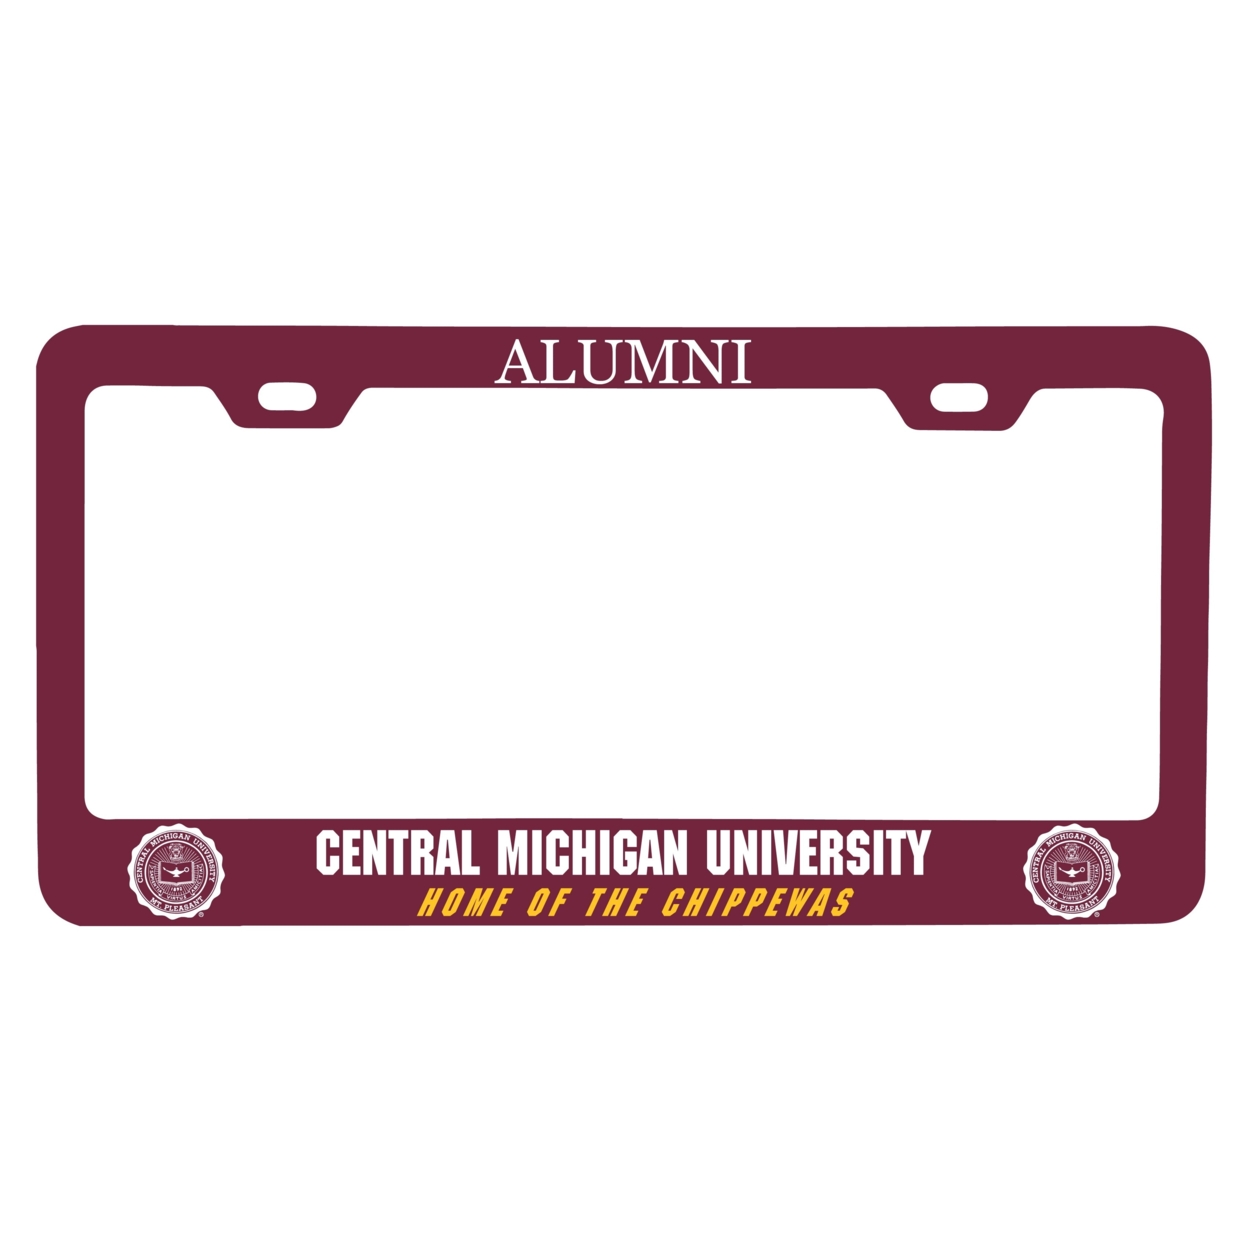 Central Michigan University Alumni License Plate Frame